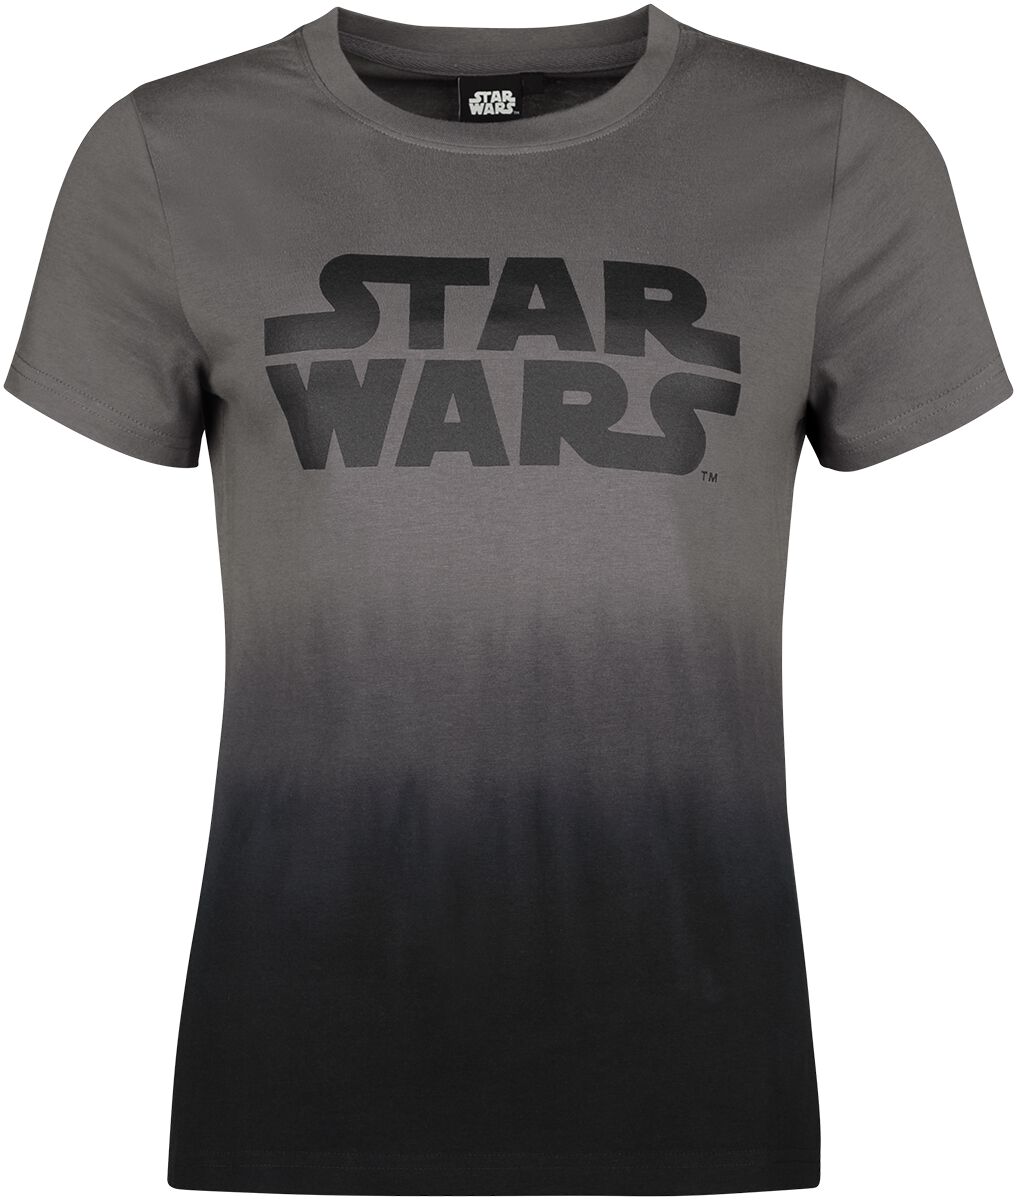 Star Wars Star Wars T-Shirt multicolor in S